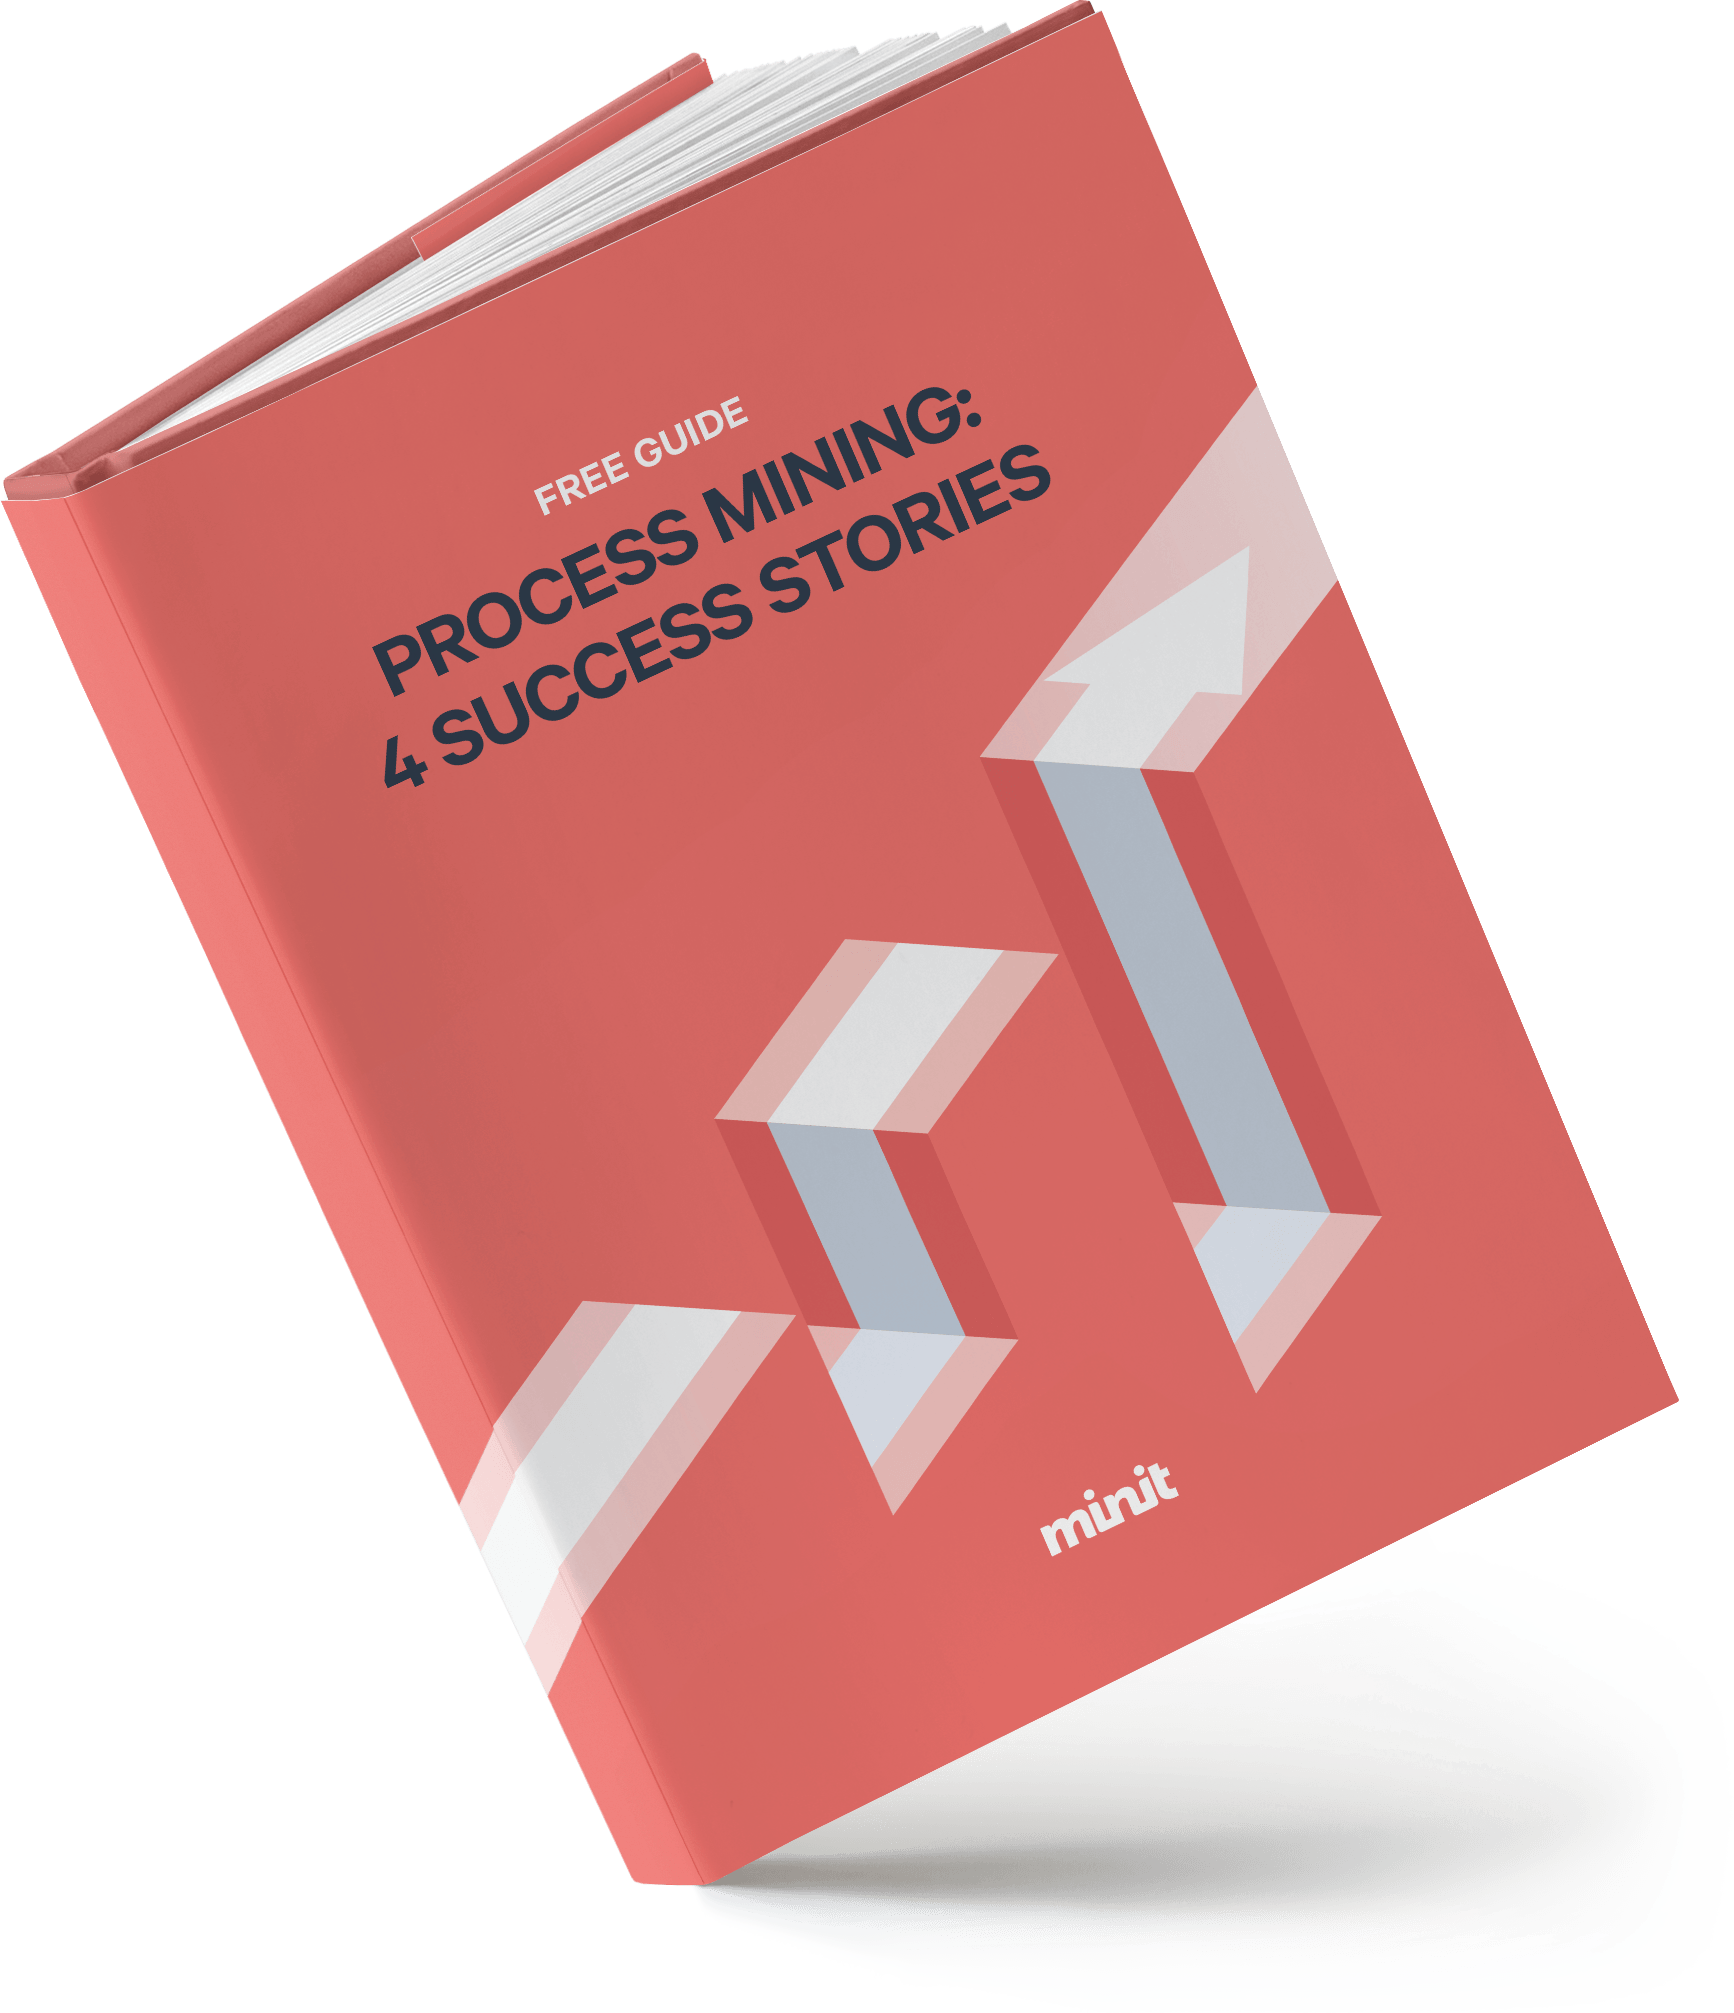 Process Mining: 4 Success Stories